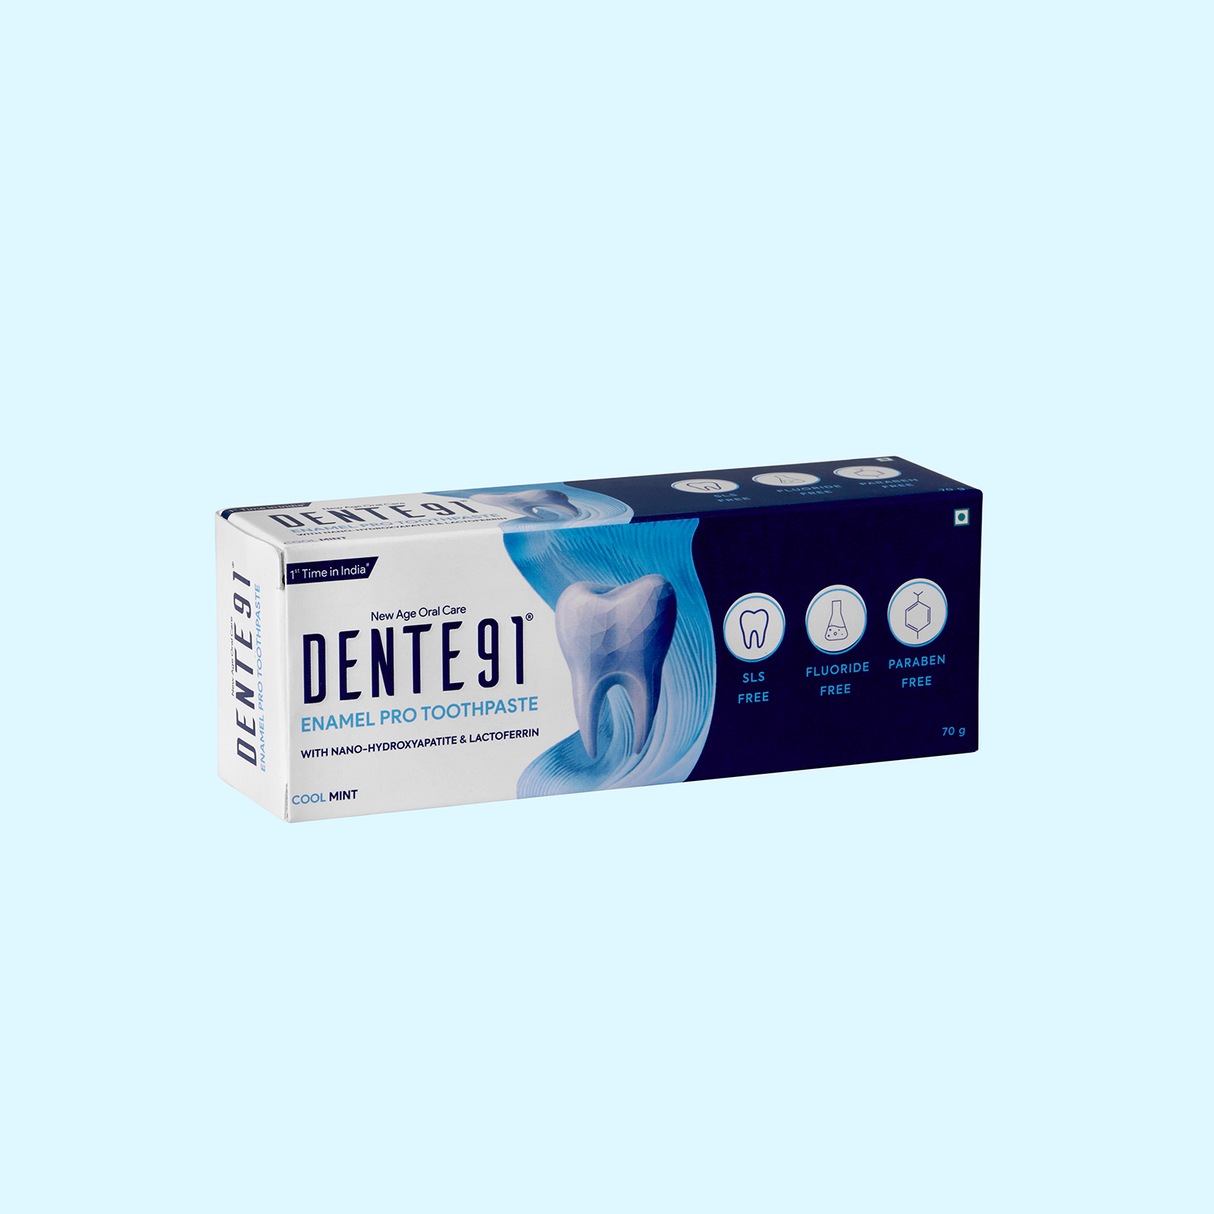 Dente91 Enamel Pro Toothpaste